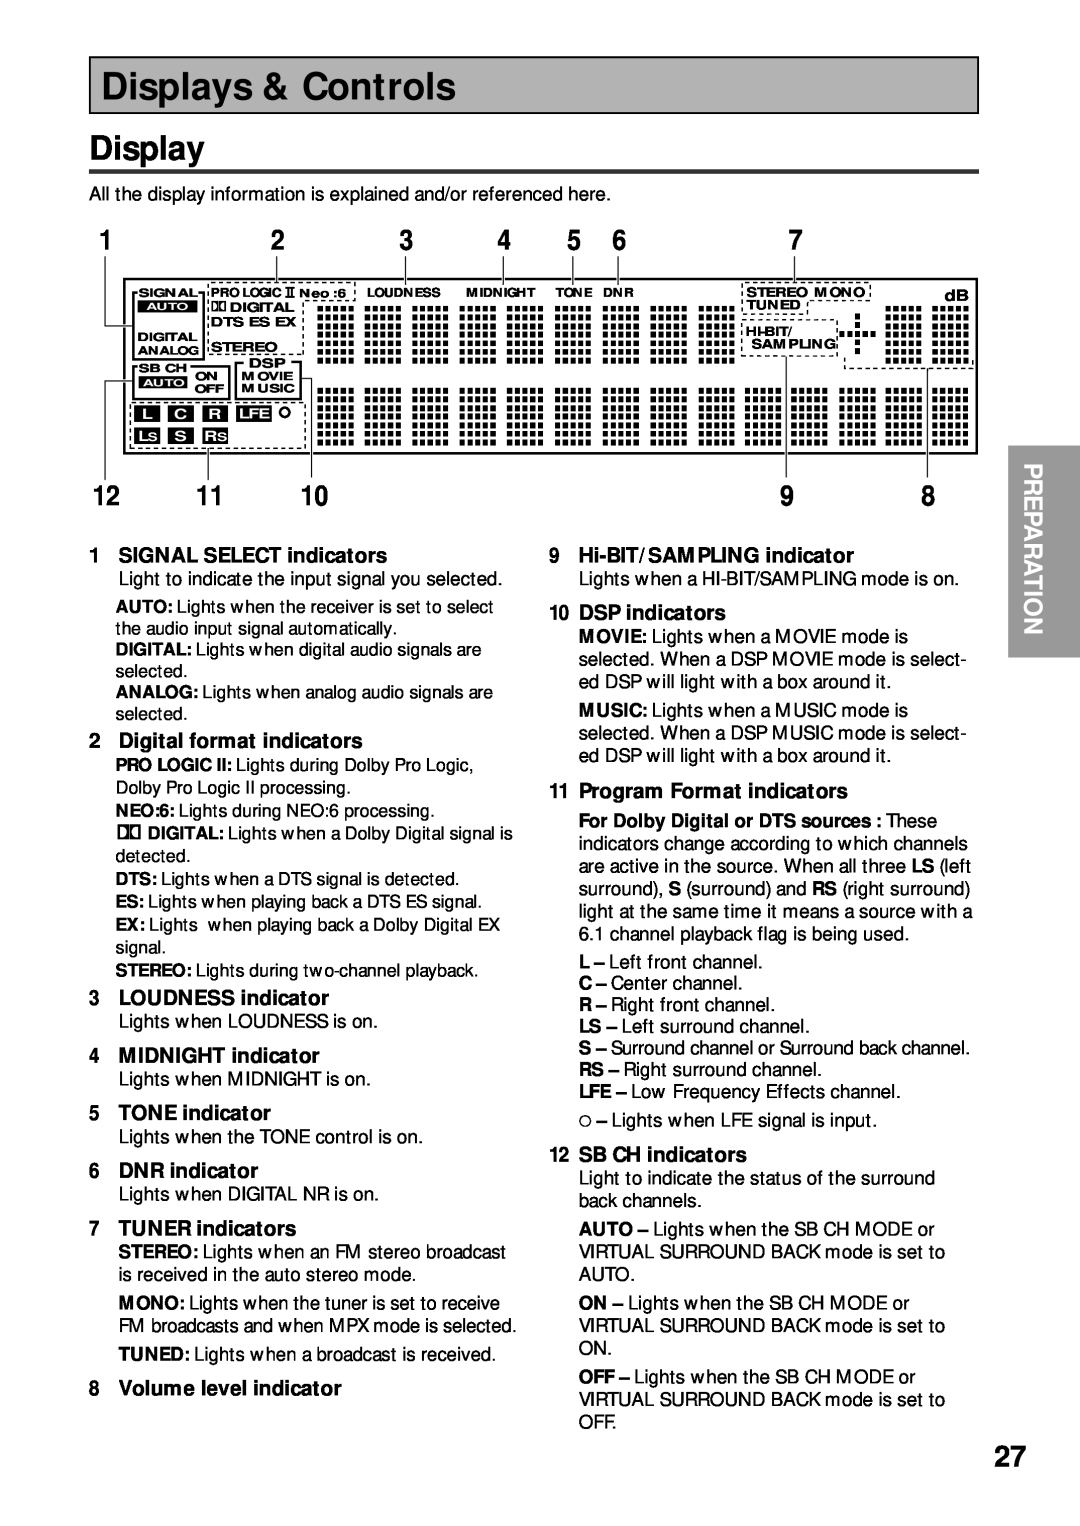 Pioneer VSX-43TX operating instructions Displays & Controls 